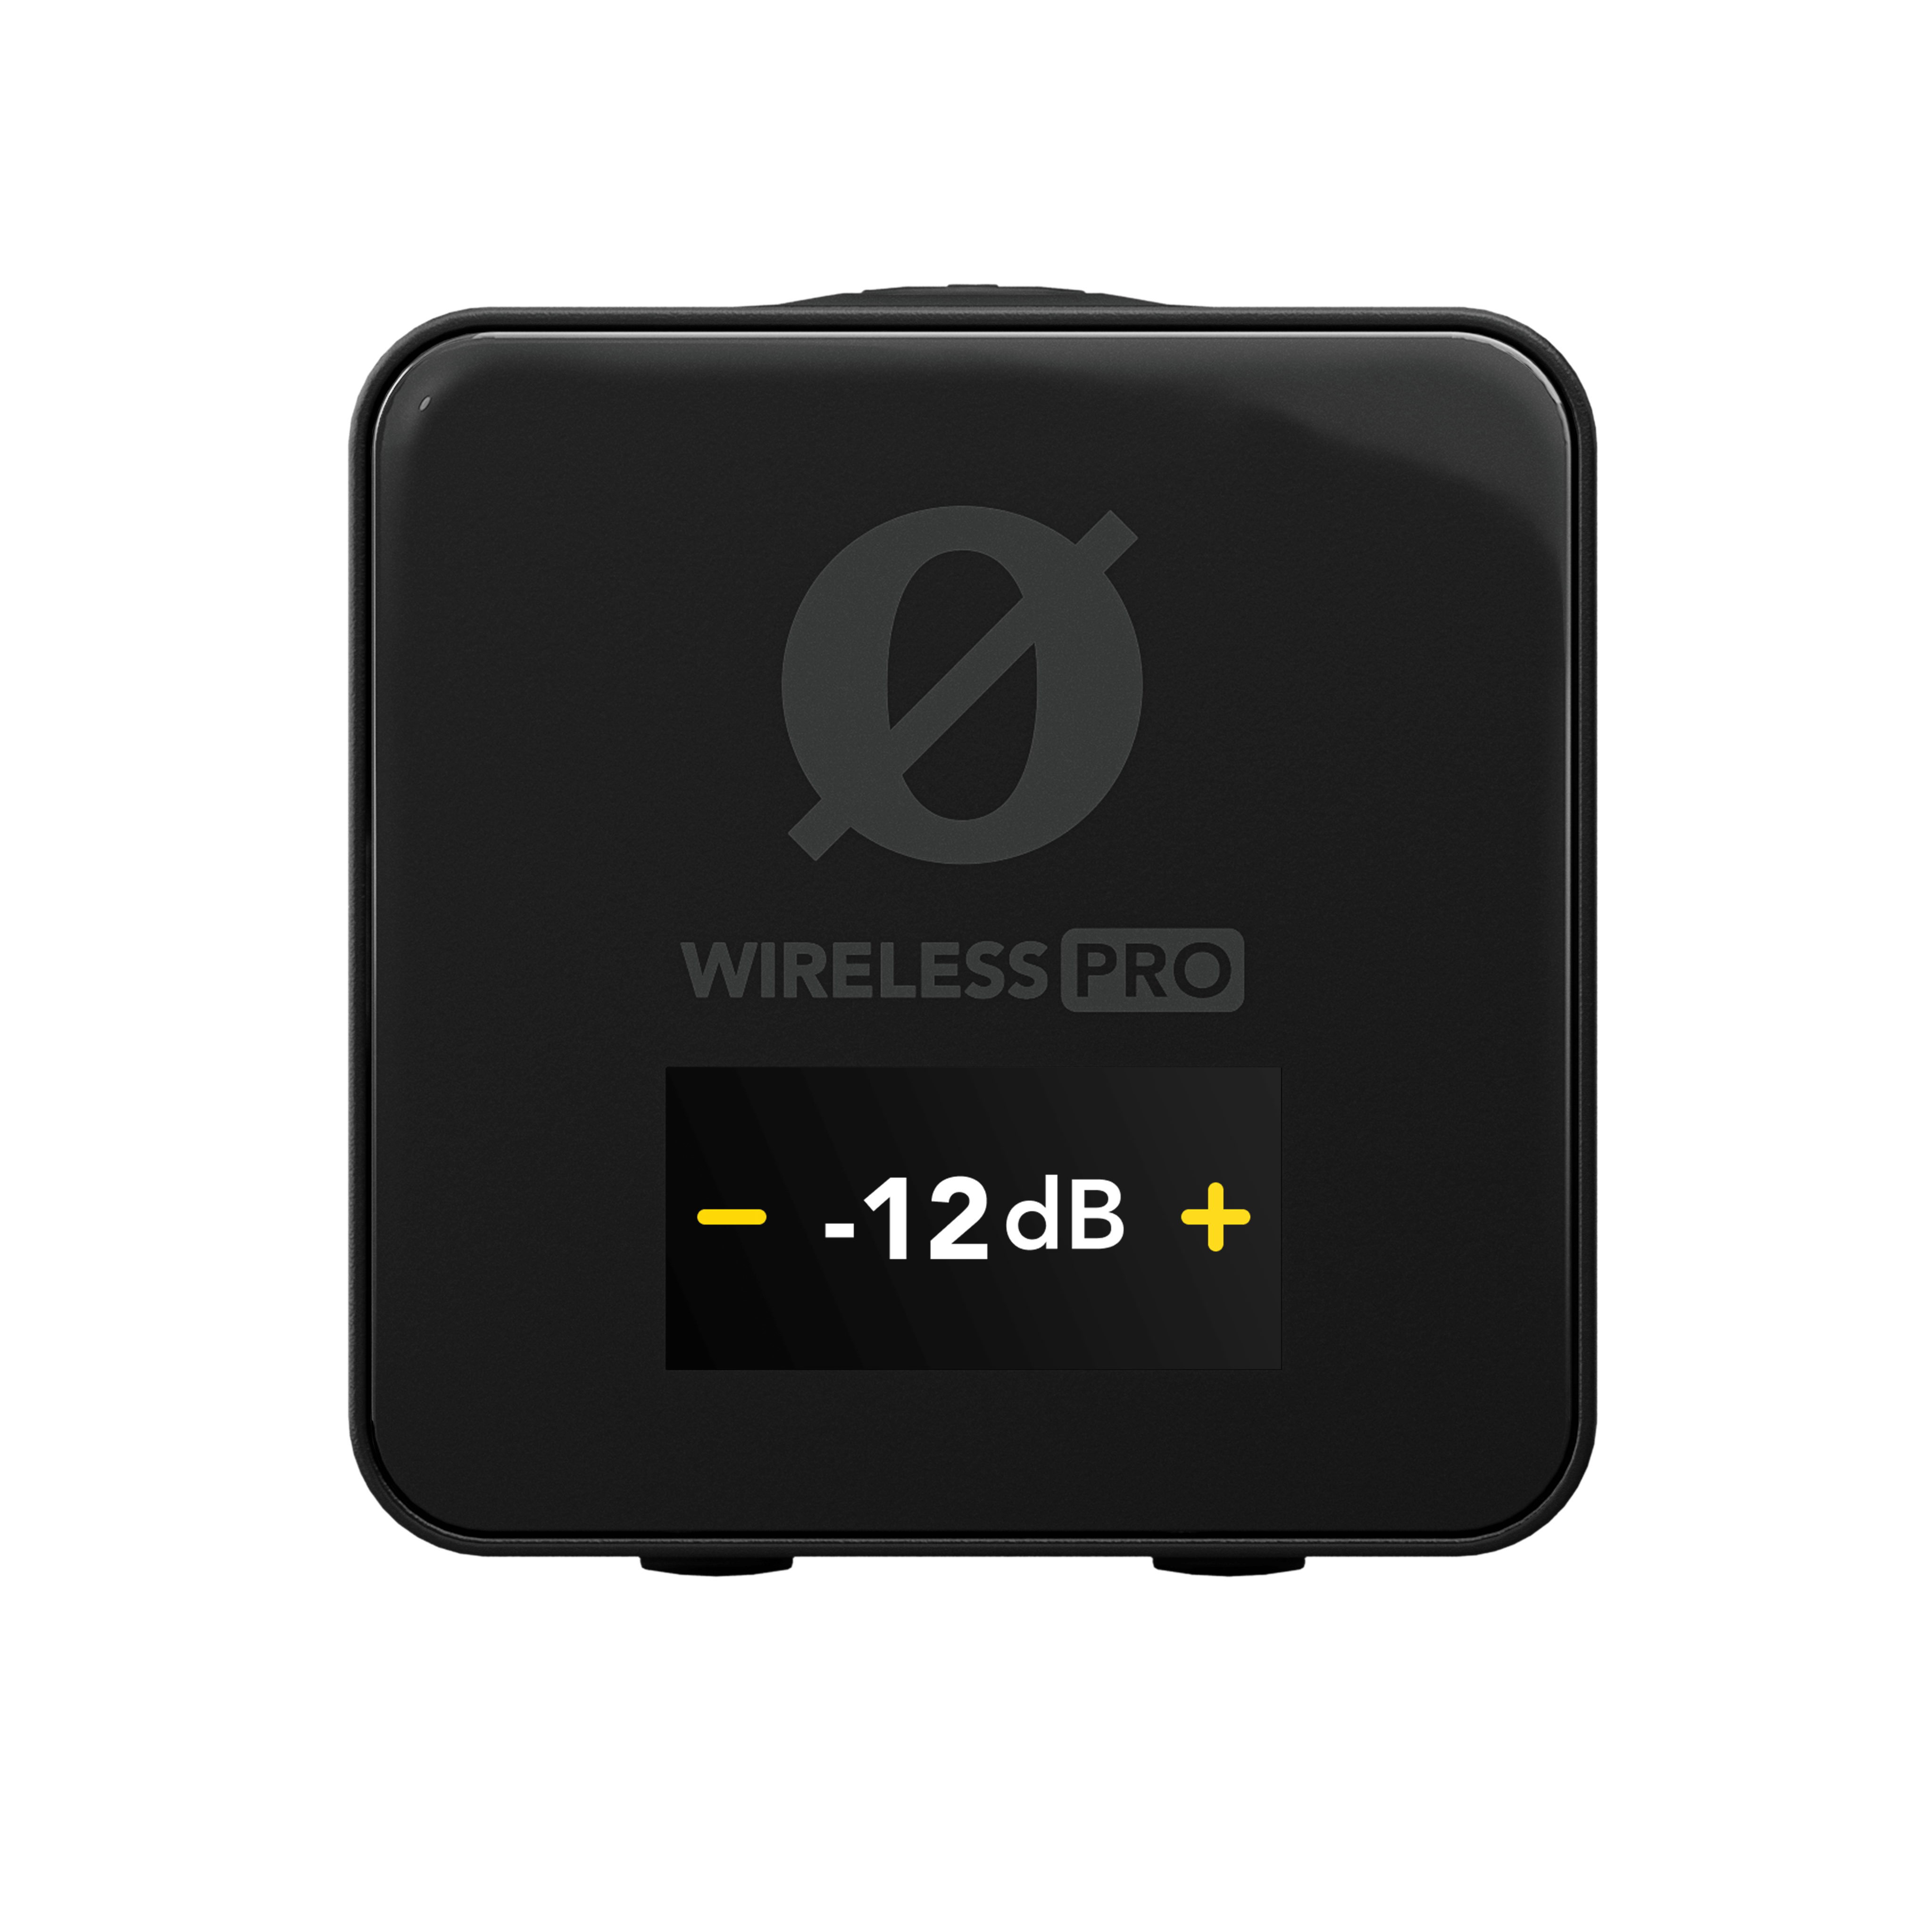 Wireless PRO gain adjustment screen